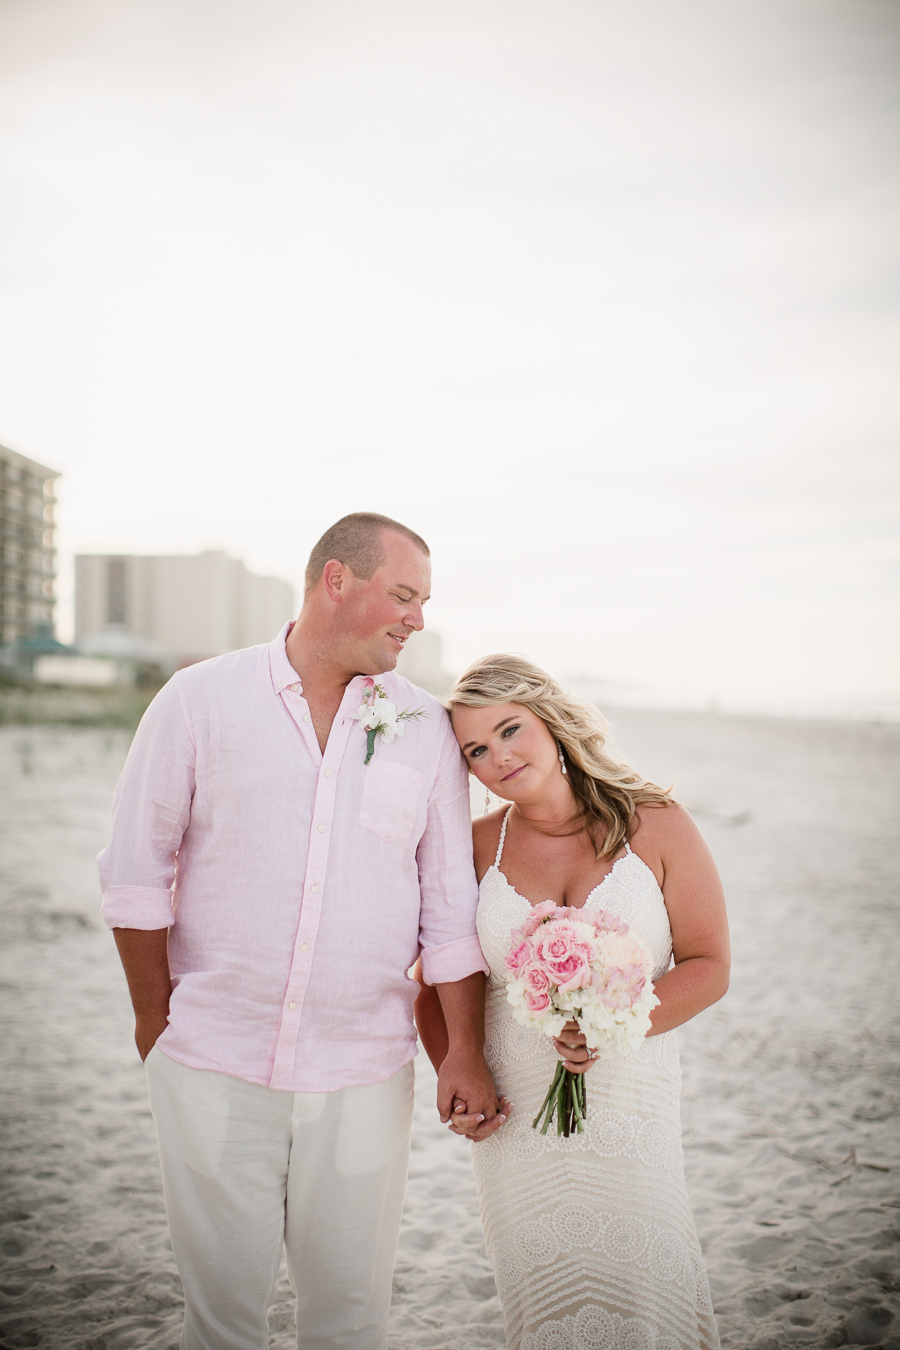 Bride with head on grooms shoulder at this Daytona Beach Wedding by Destination Wedding Photographer, Amanda May Photos.